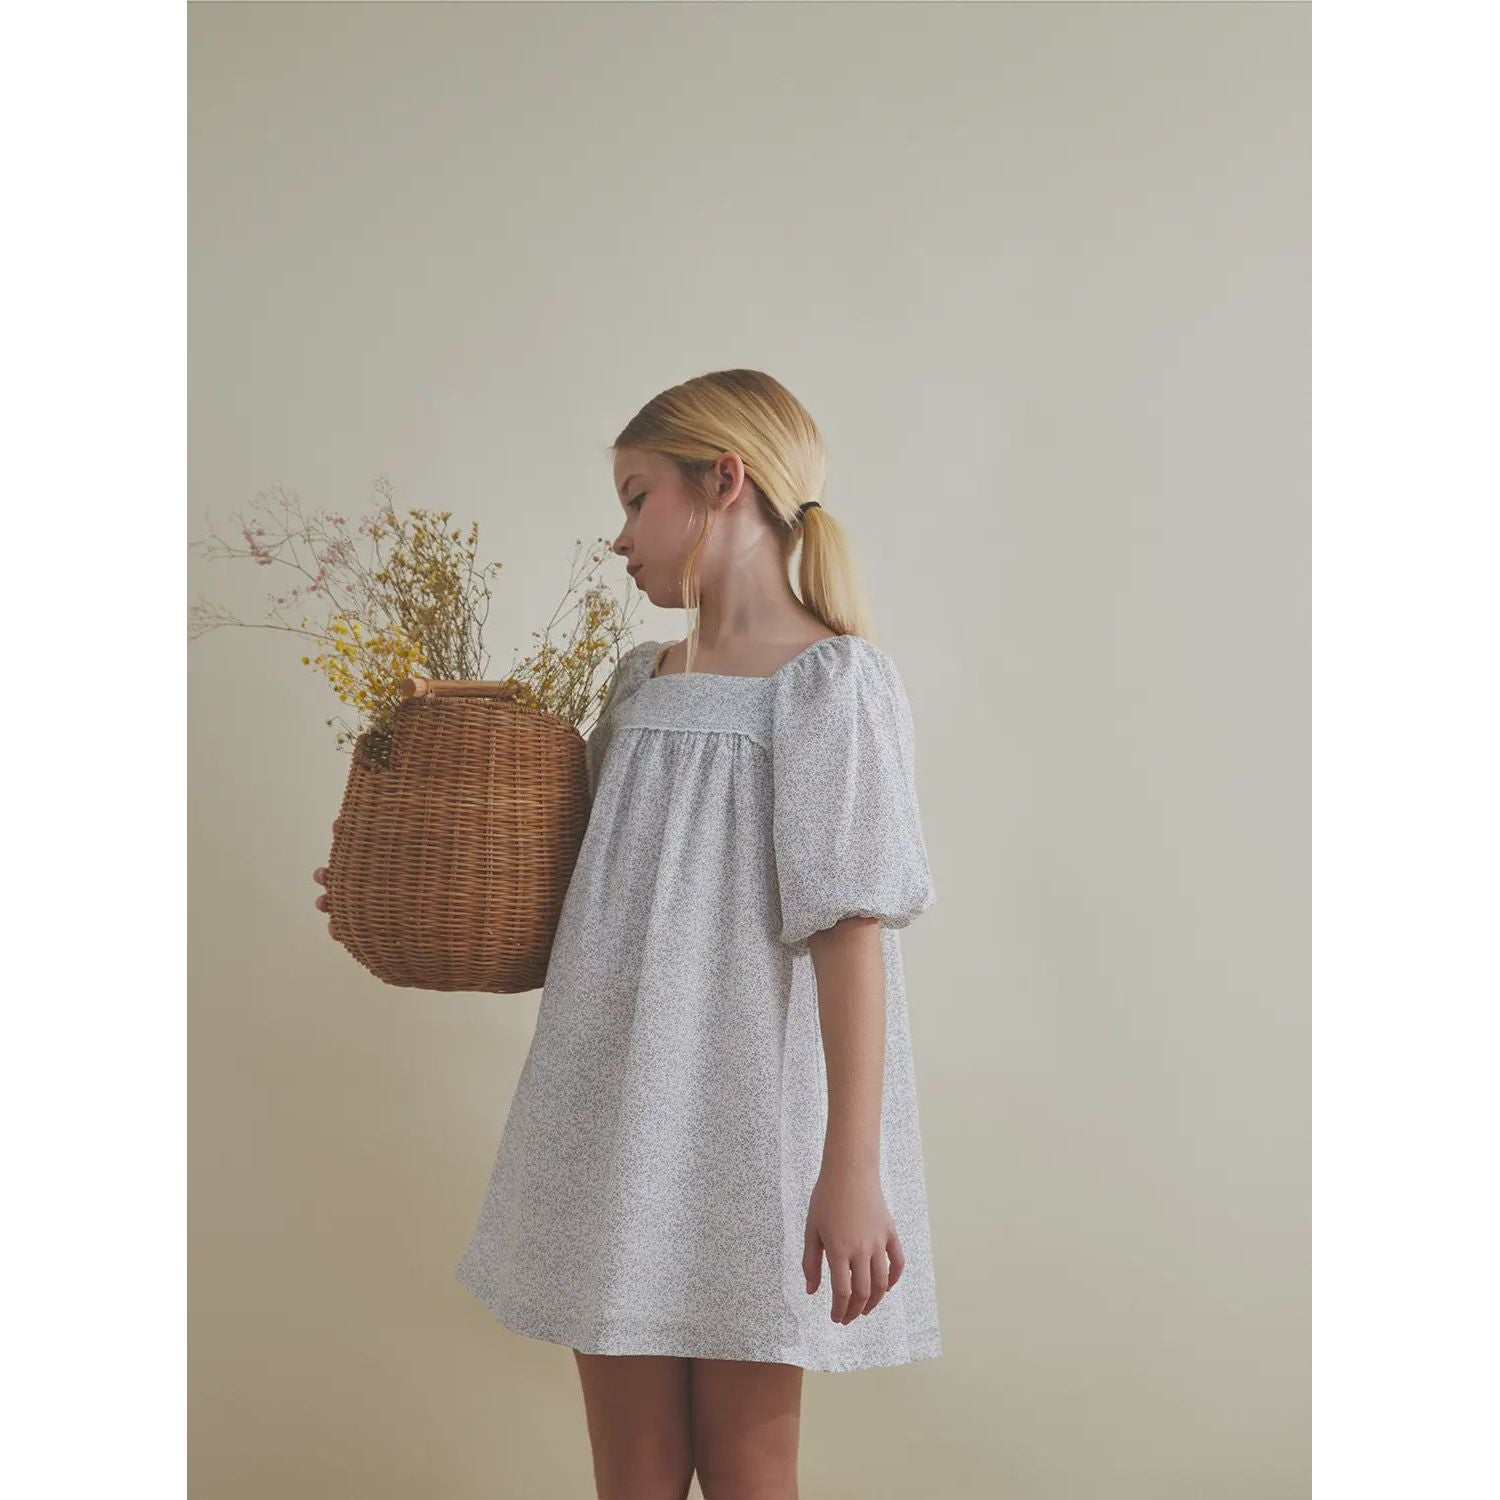 Dadati Girl's White Dress with Grey Leaf Print